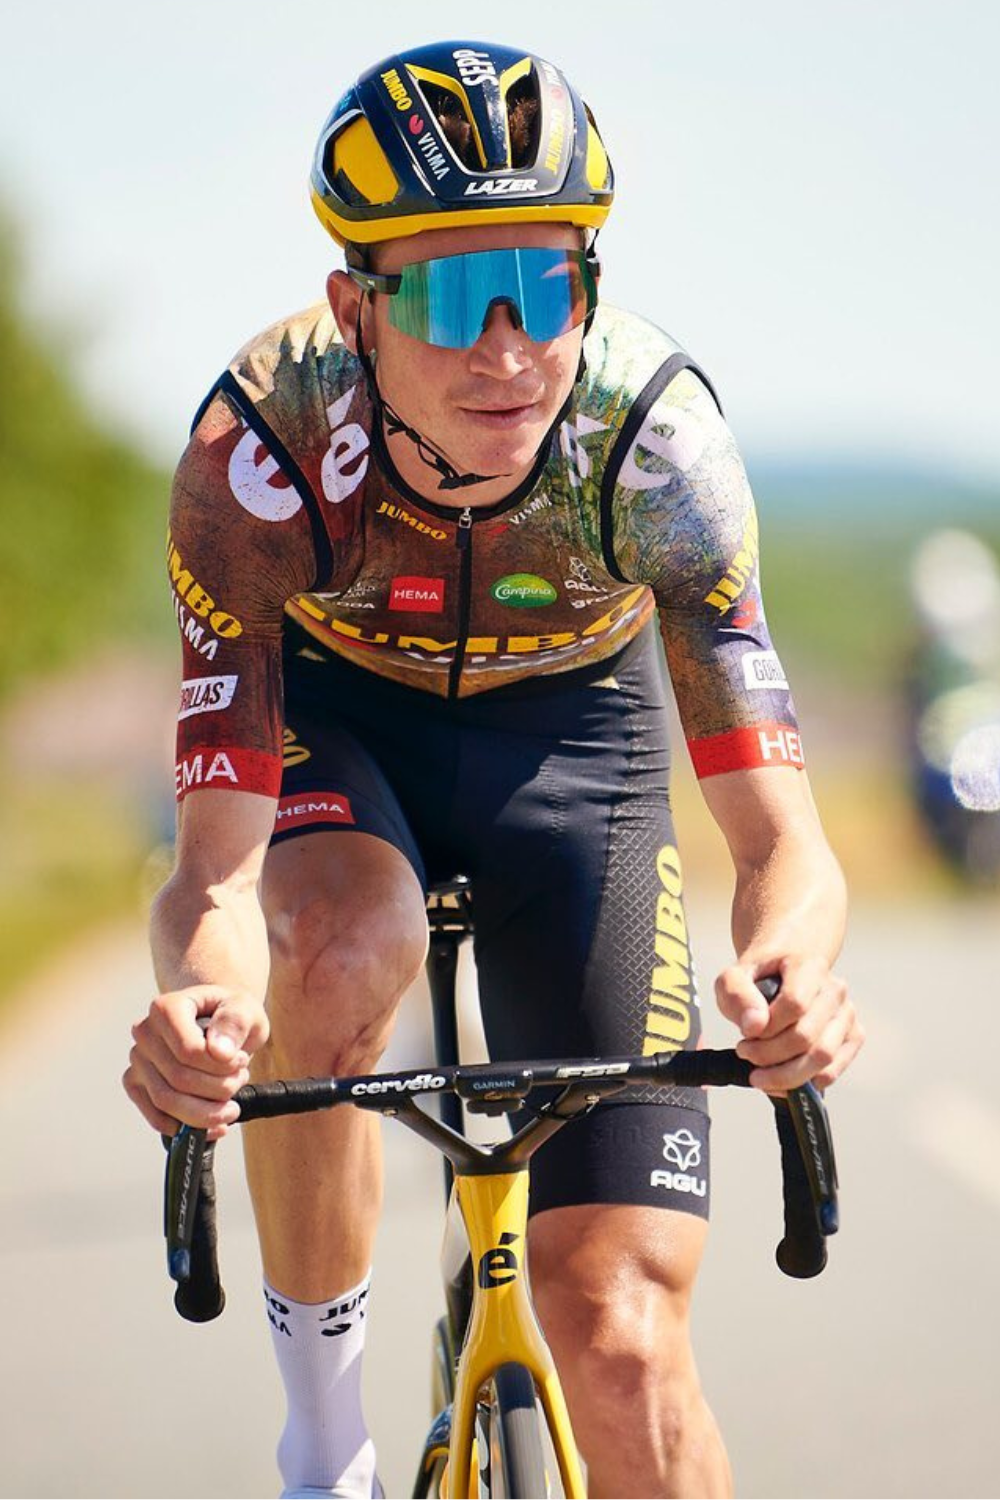 Sepp Kuss Riding On The Tour de France